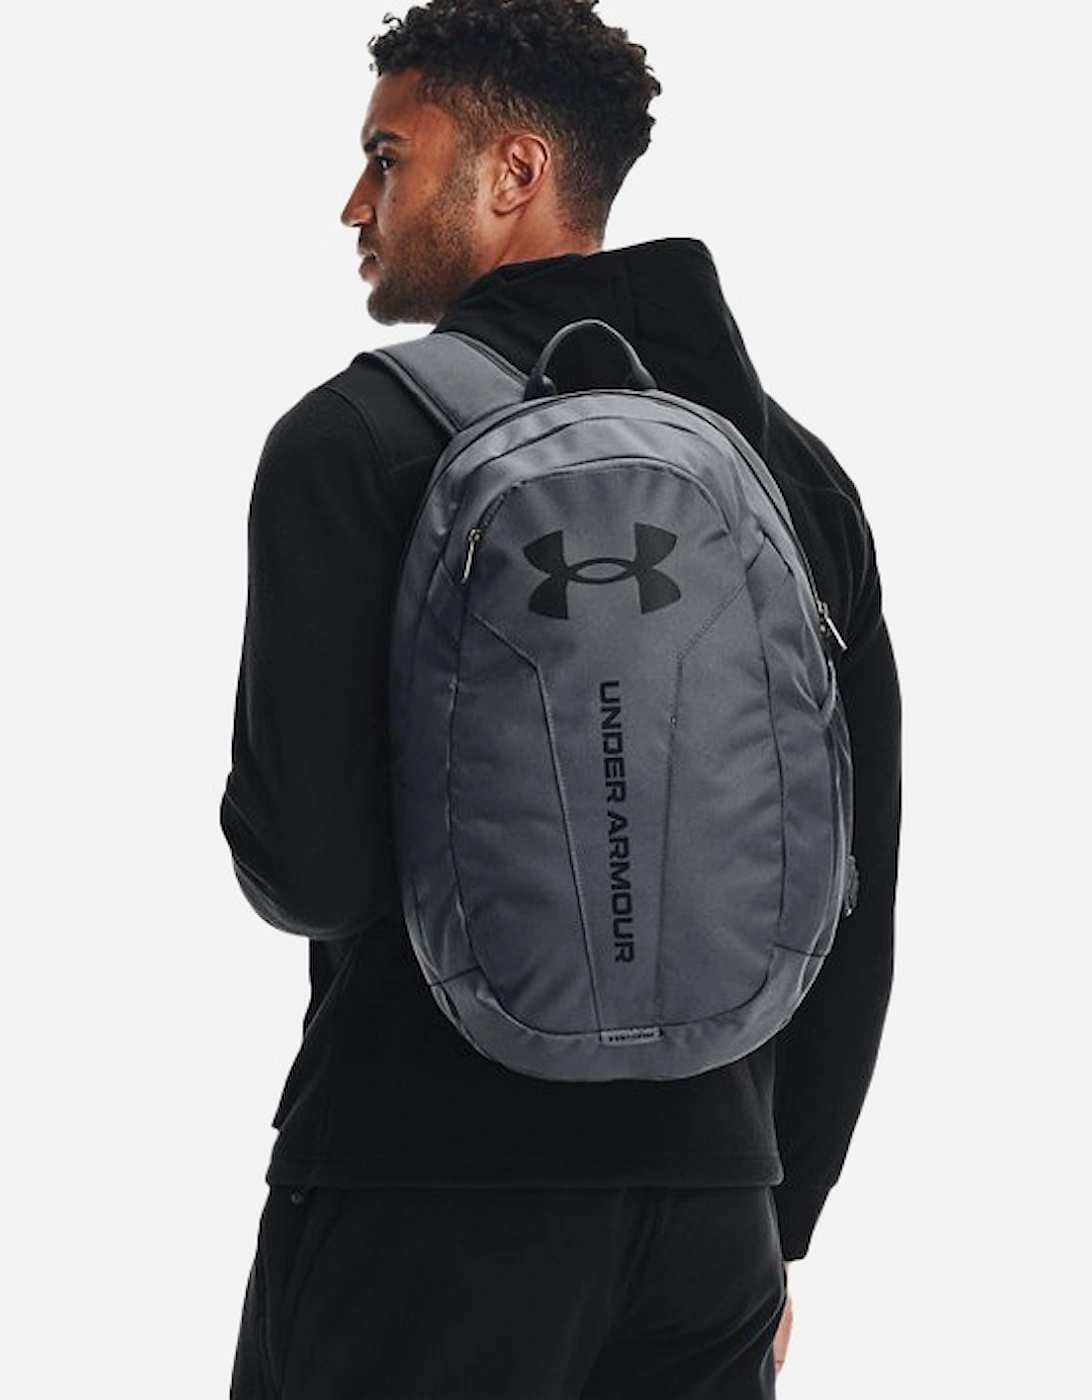 Hustle Lite Backpack (Grey)